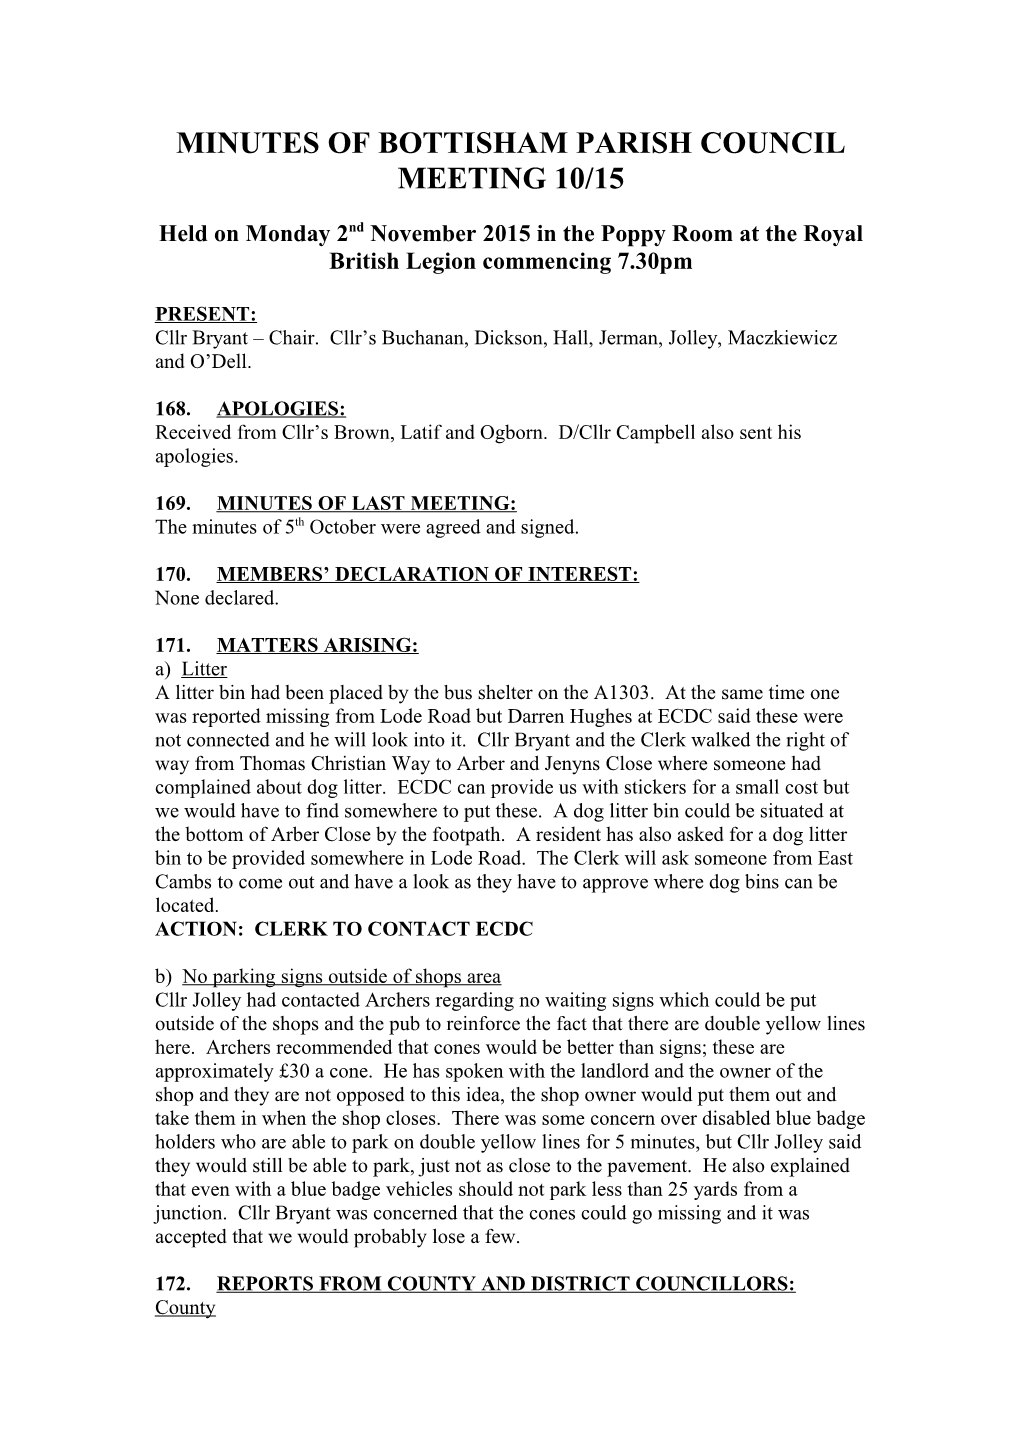 Minutes of Bottisham Parish Council Meeting 10/15